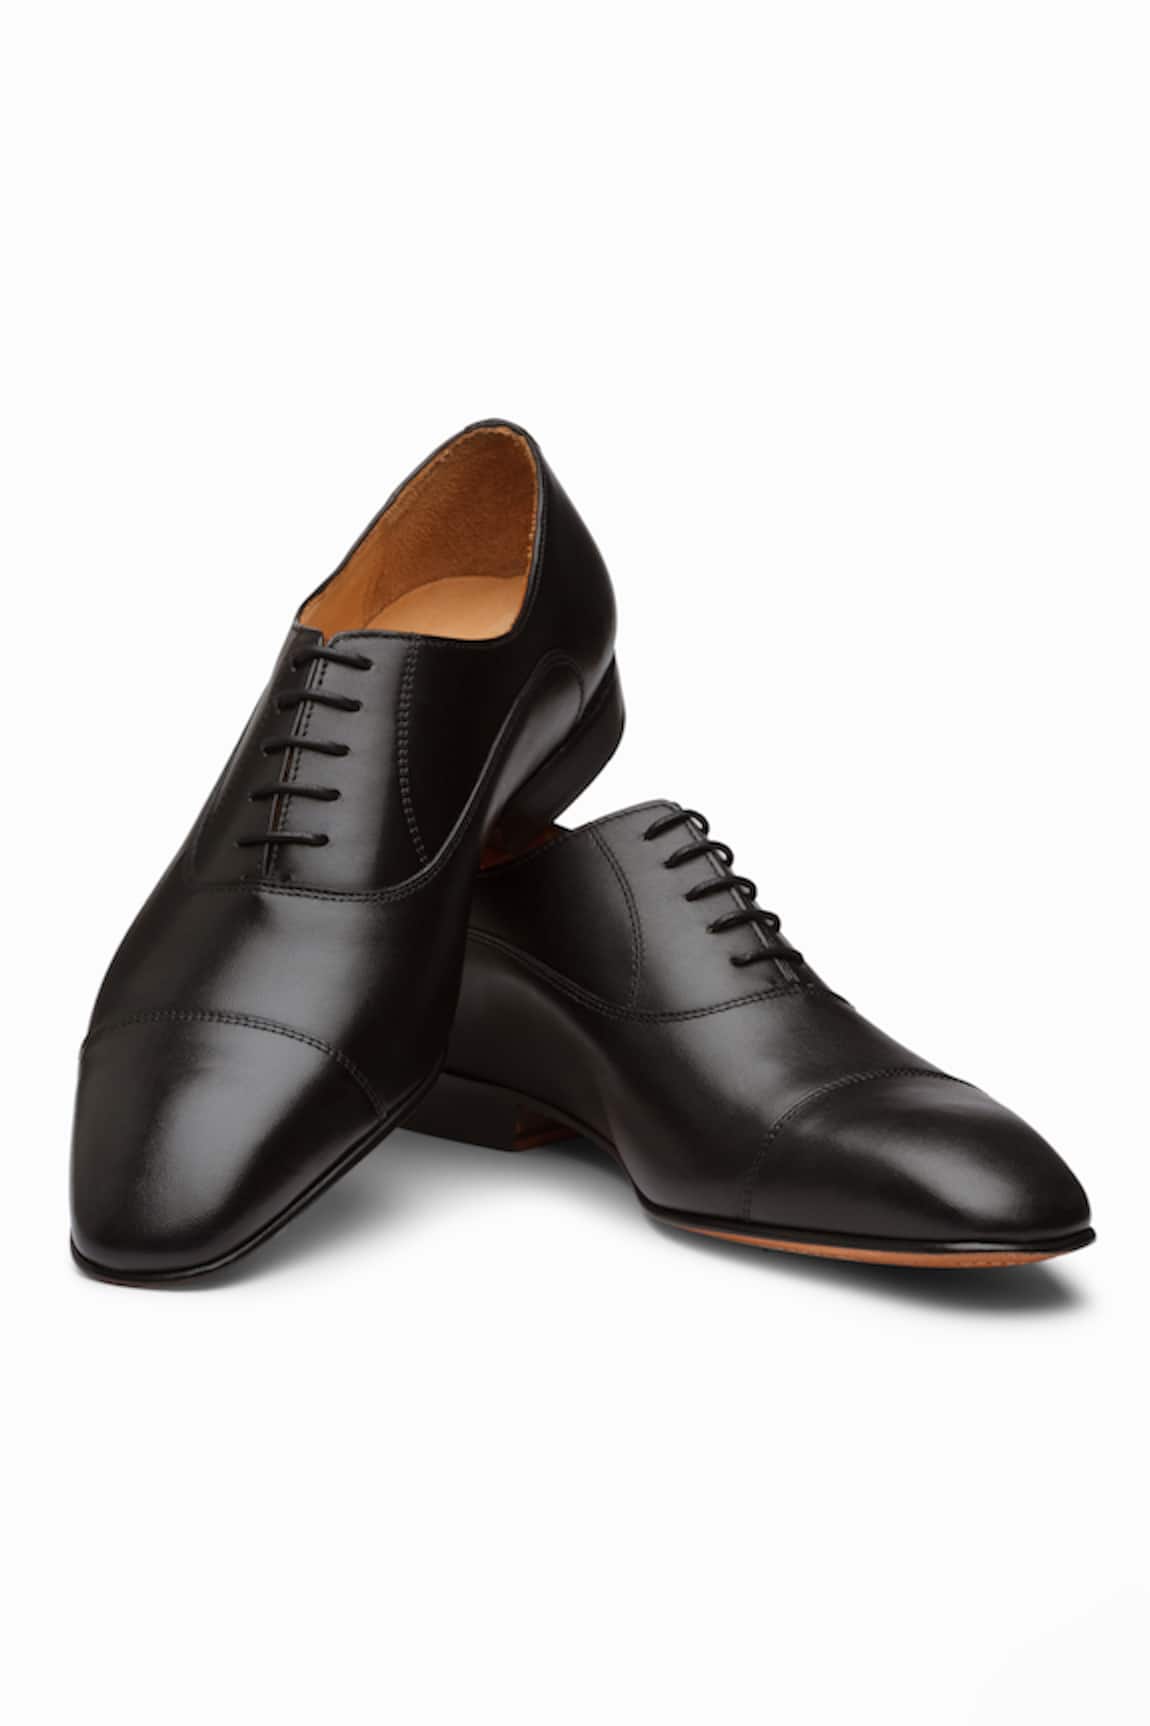 3DM LIFESTYLE Captoe Oxford Leather Shoes